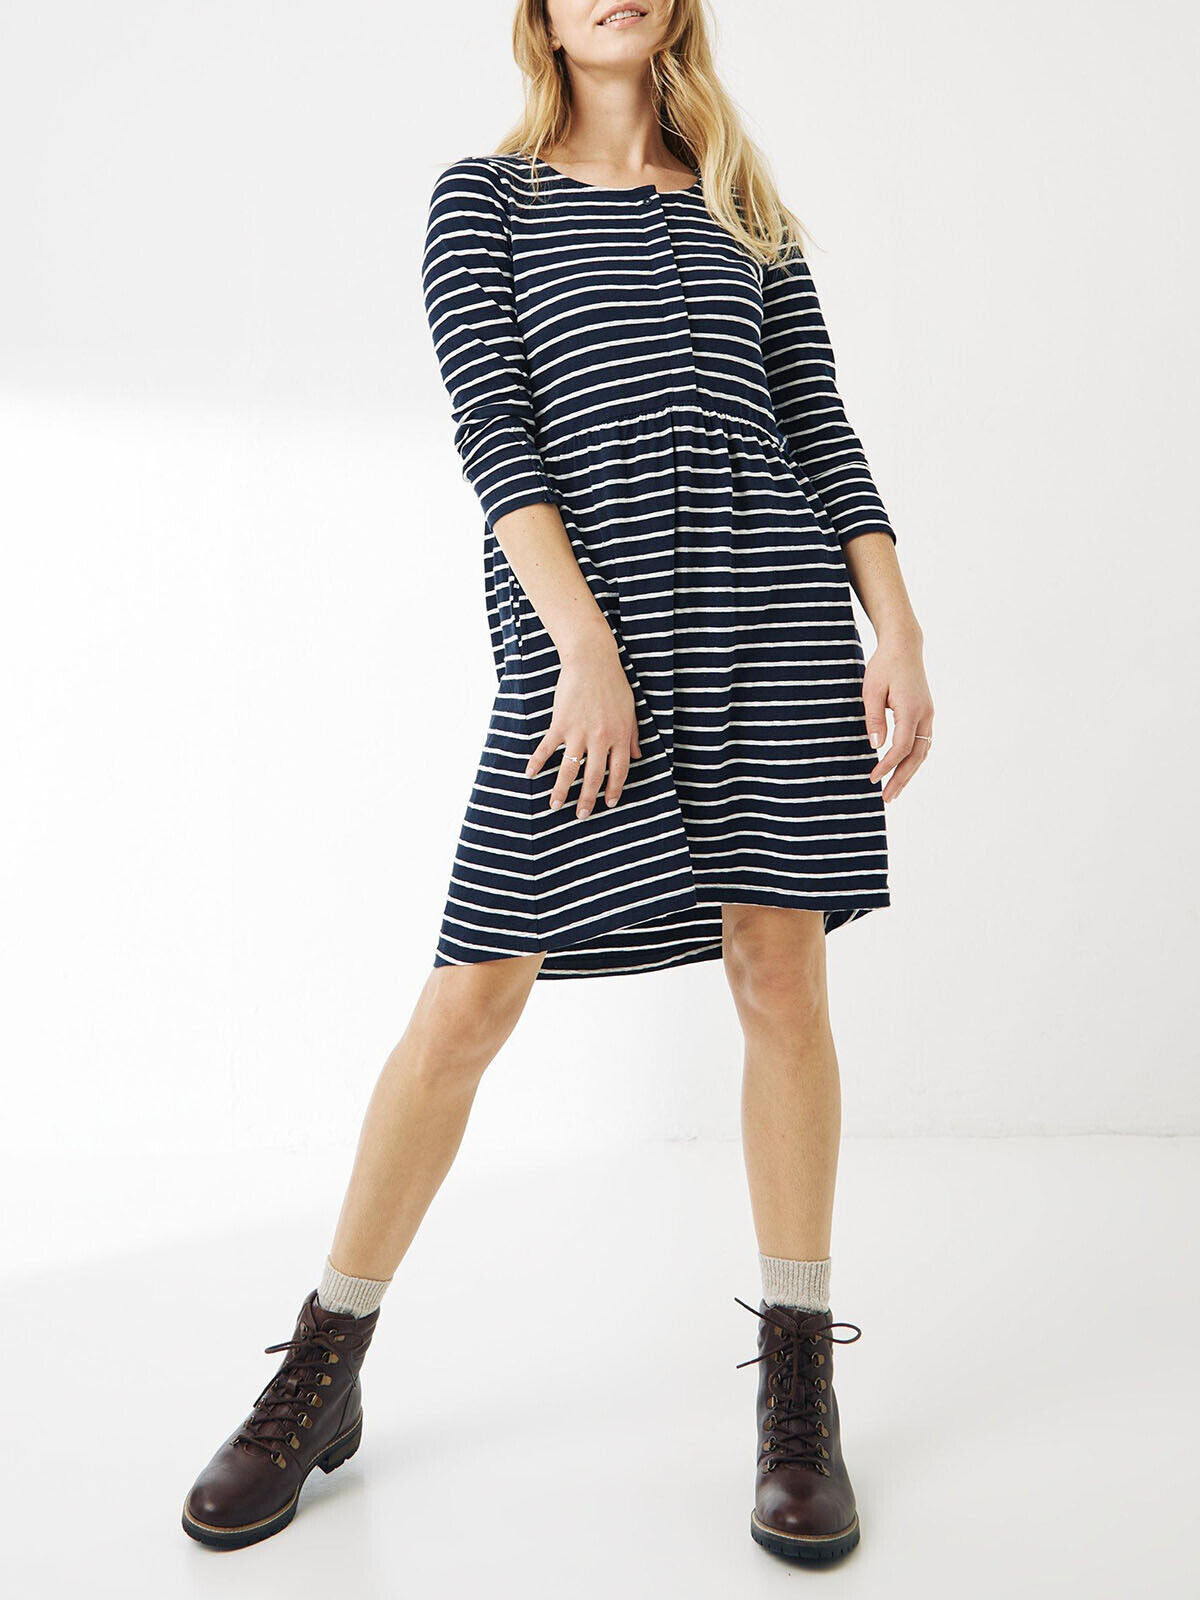 EX Fat Face Navy Nina Stripe Jersey Dress Sizes 12, 14, 24 RRP £46